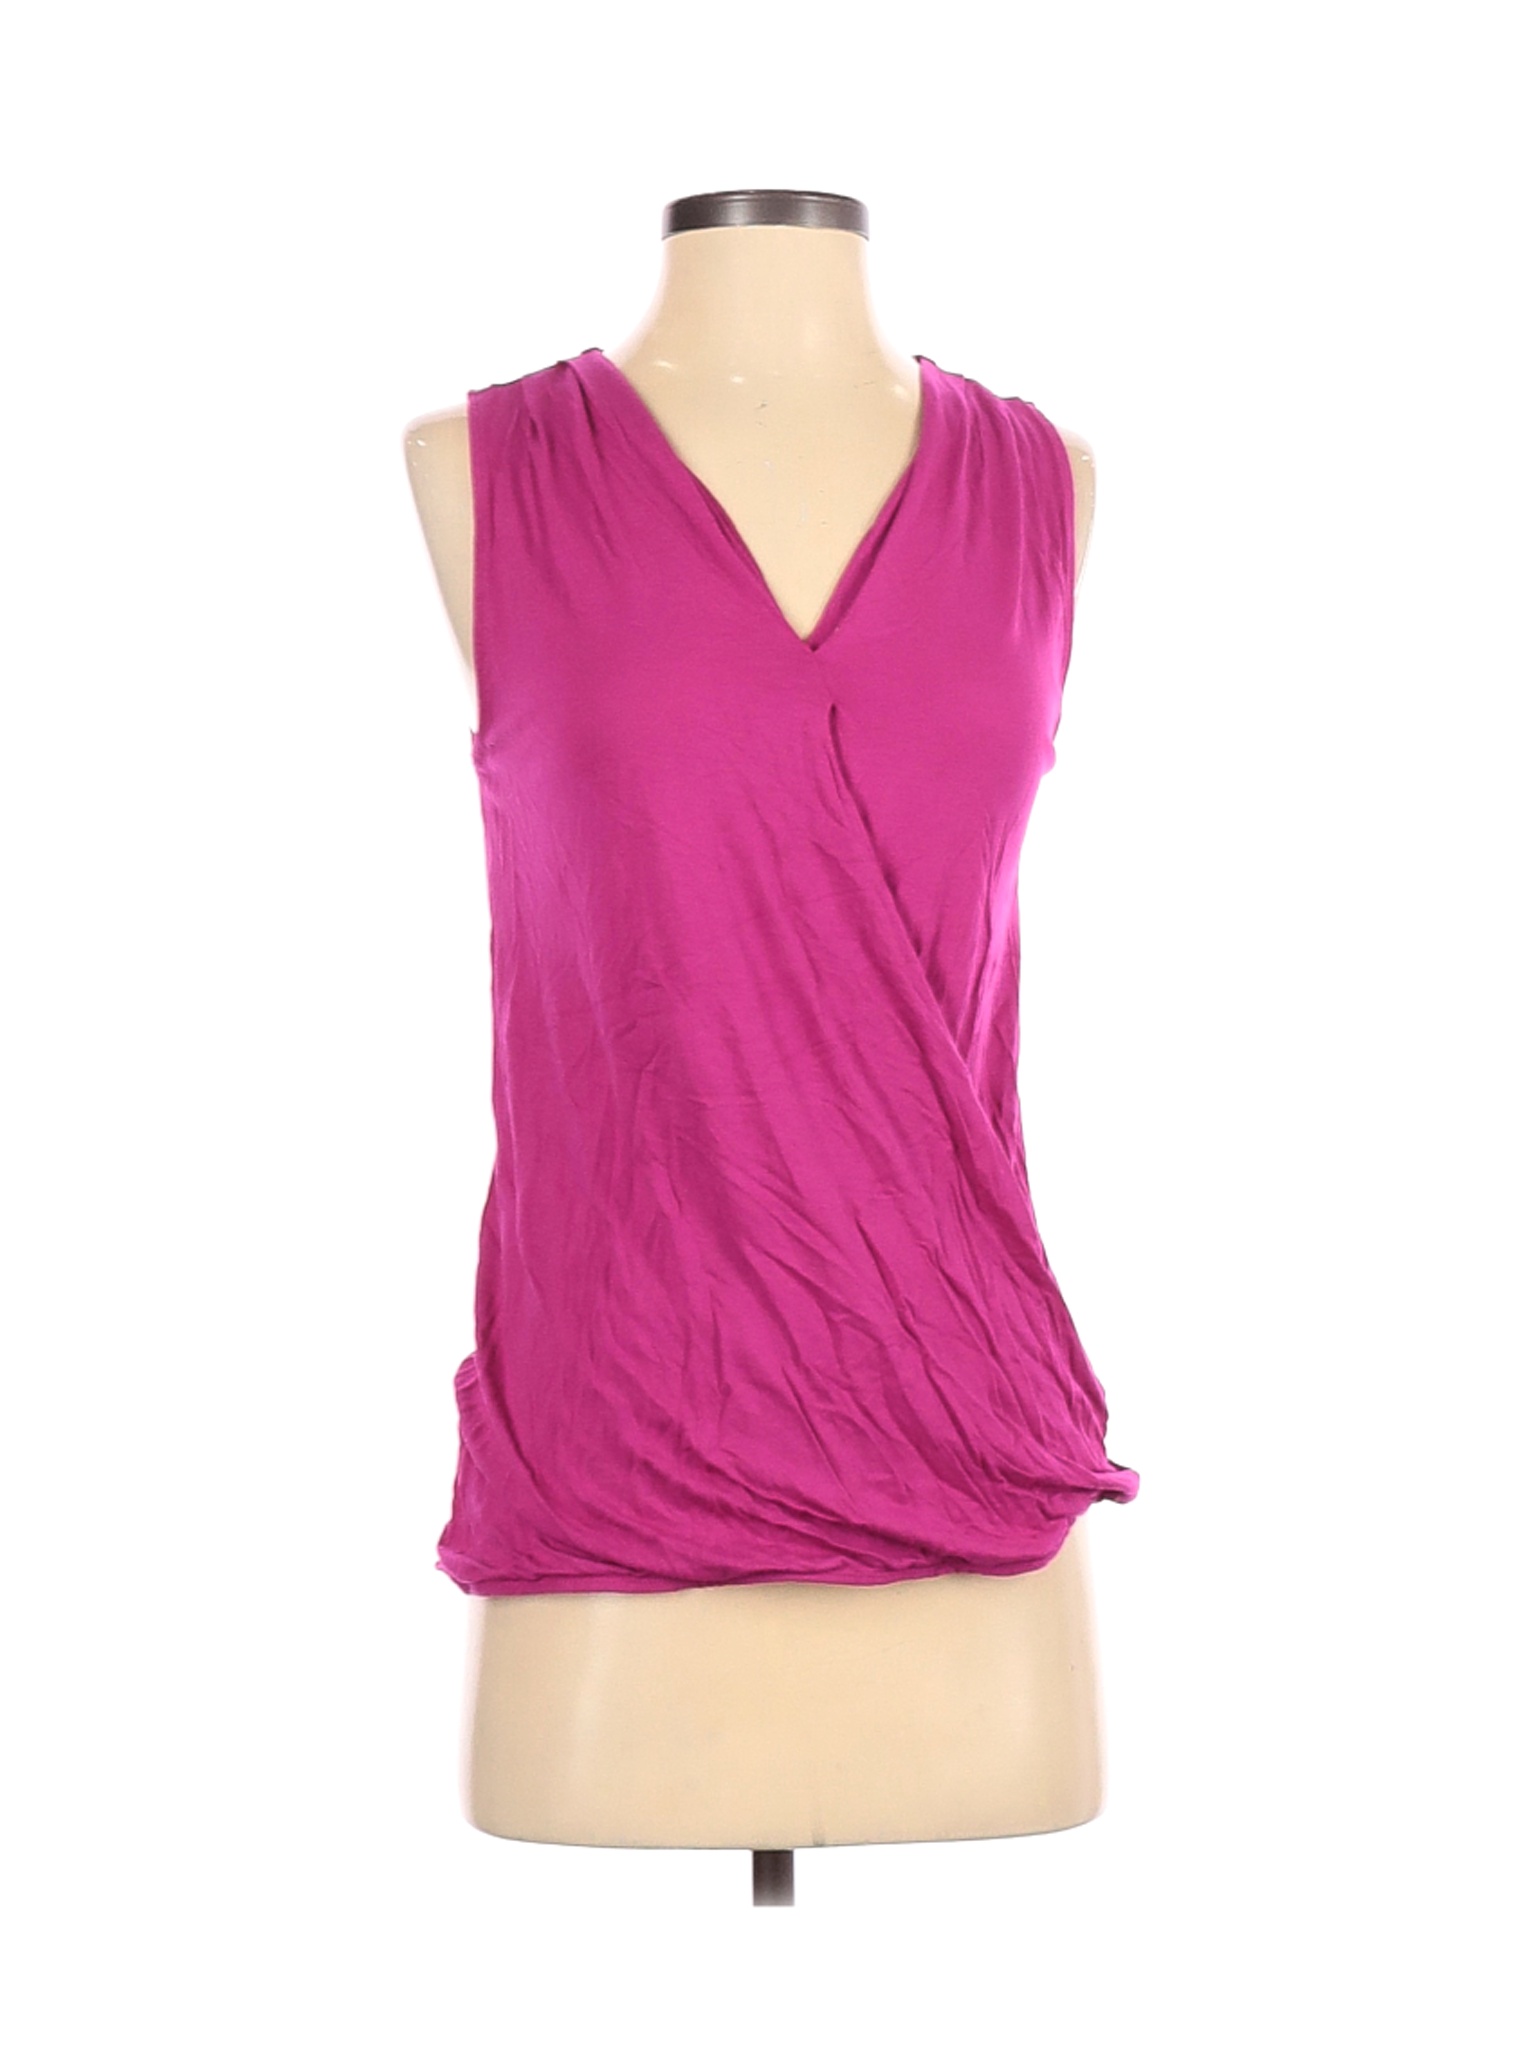 Old Navy Women Pink Sleeveless Top S | eBay